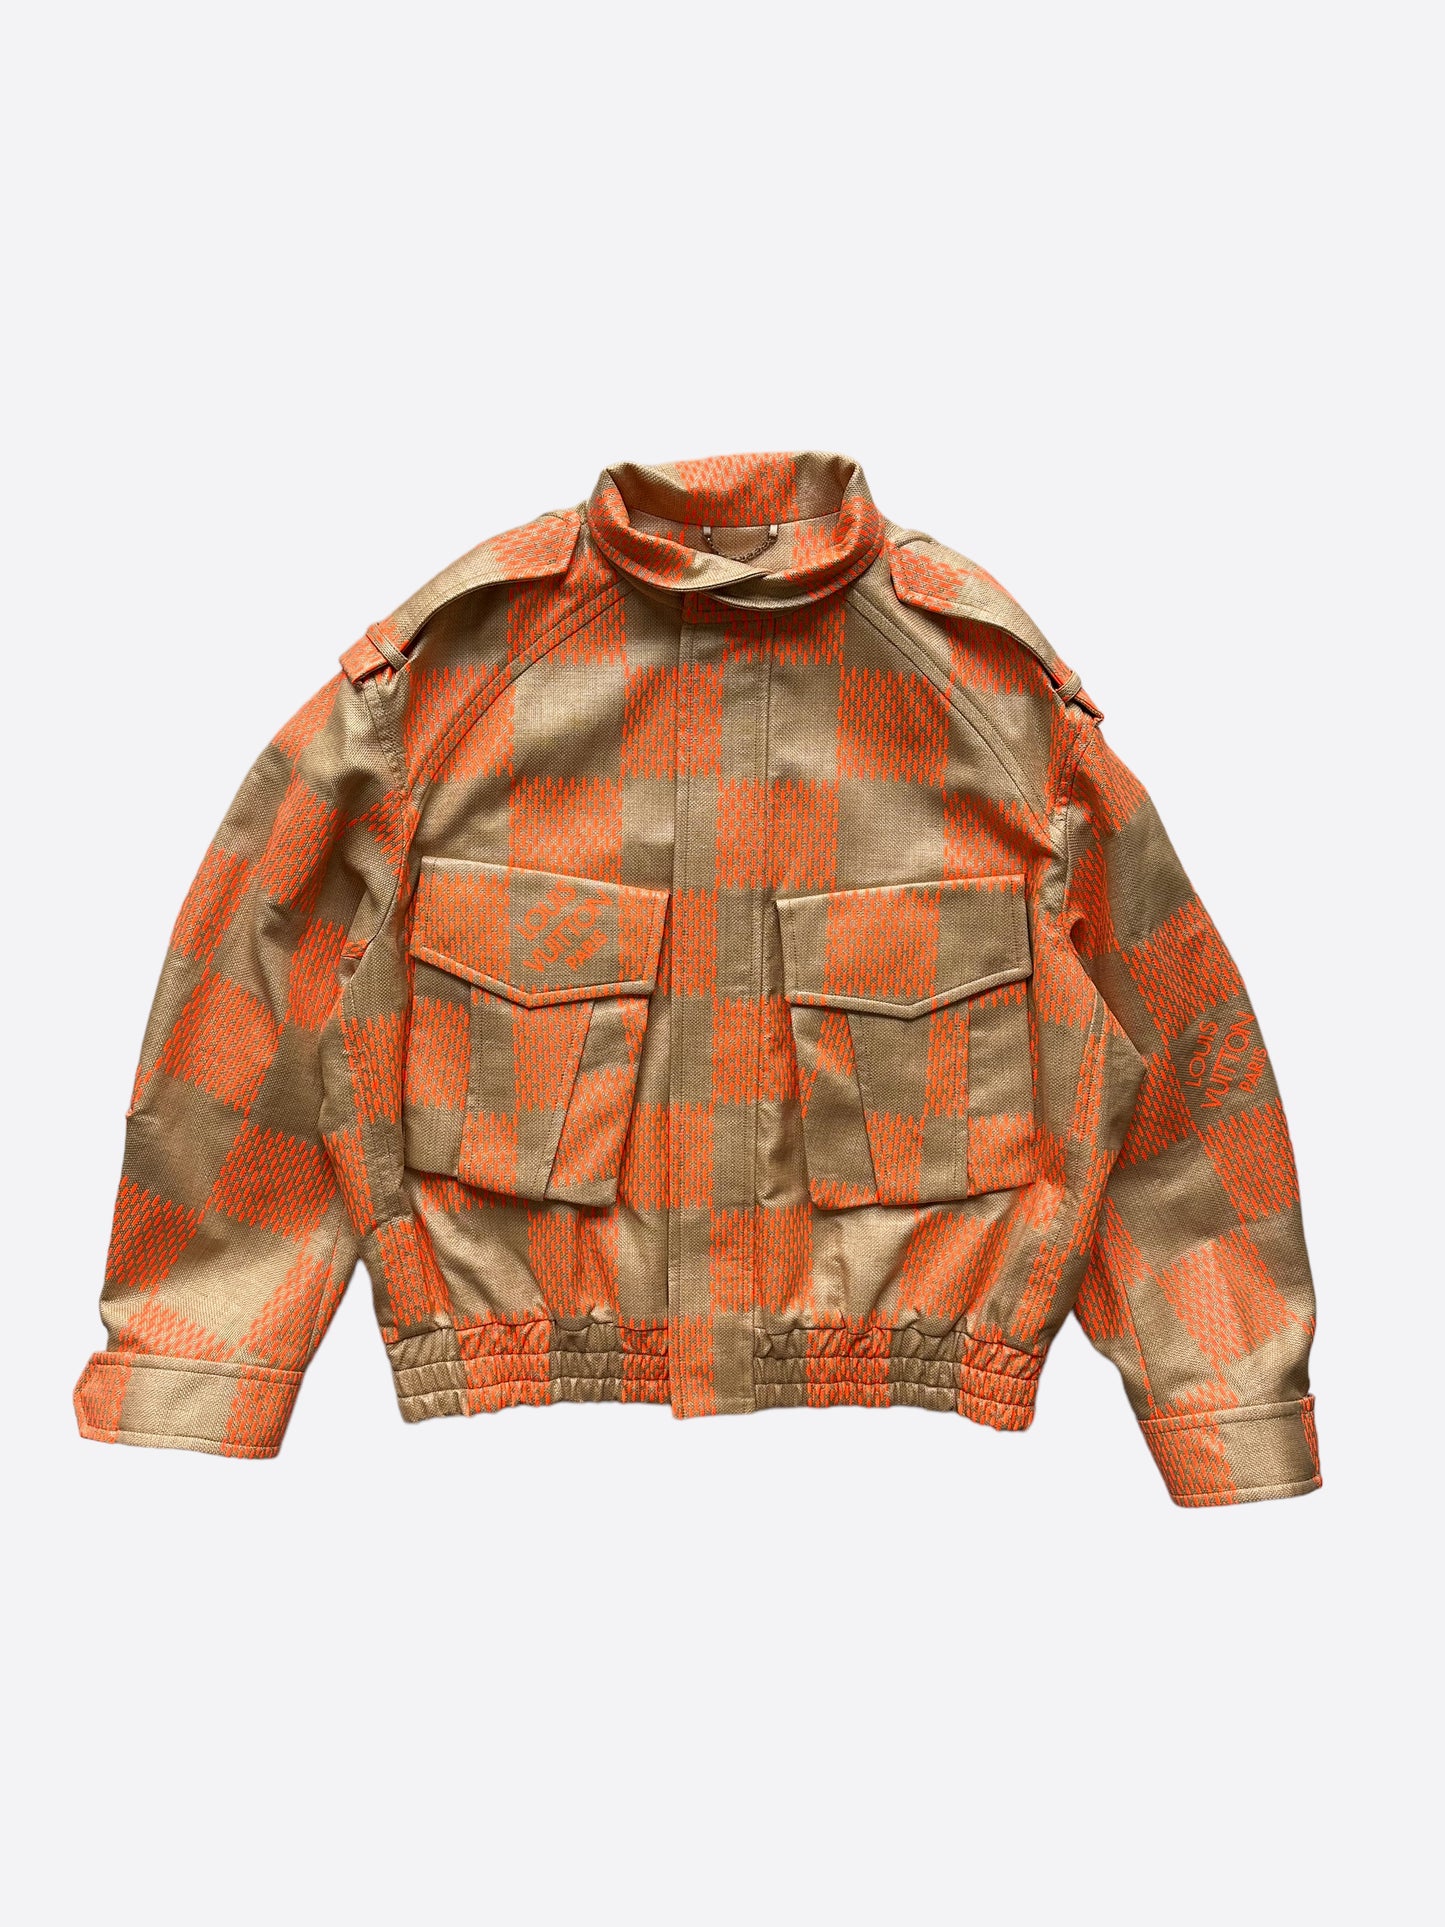 vuitton orange jacket